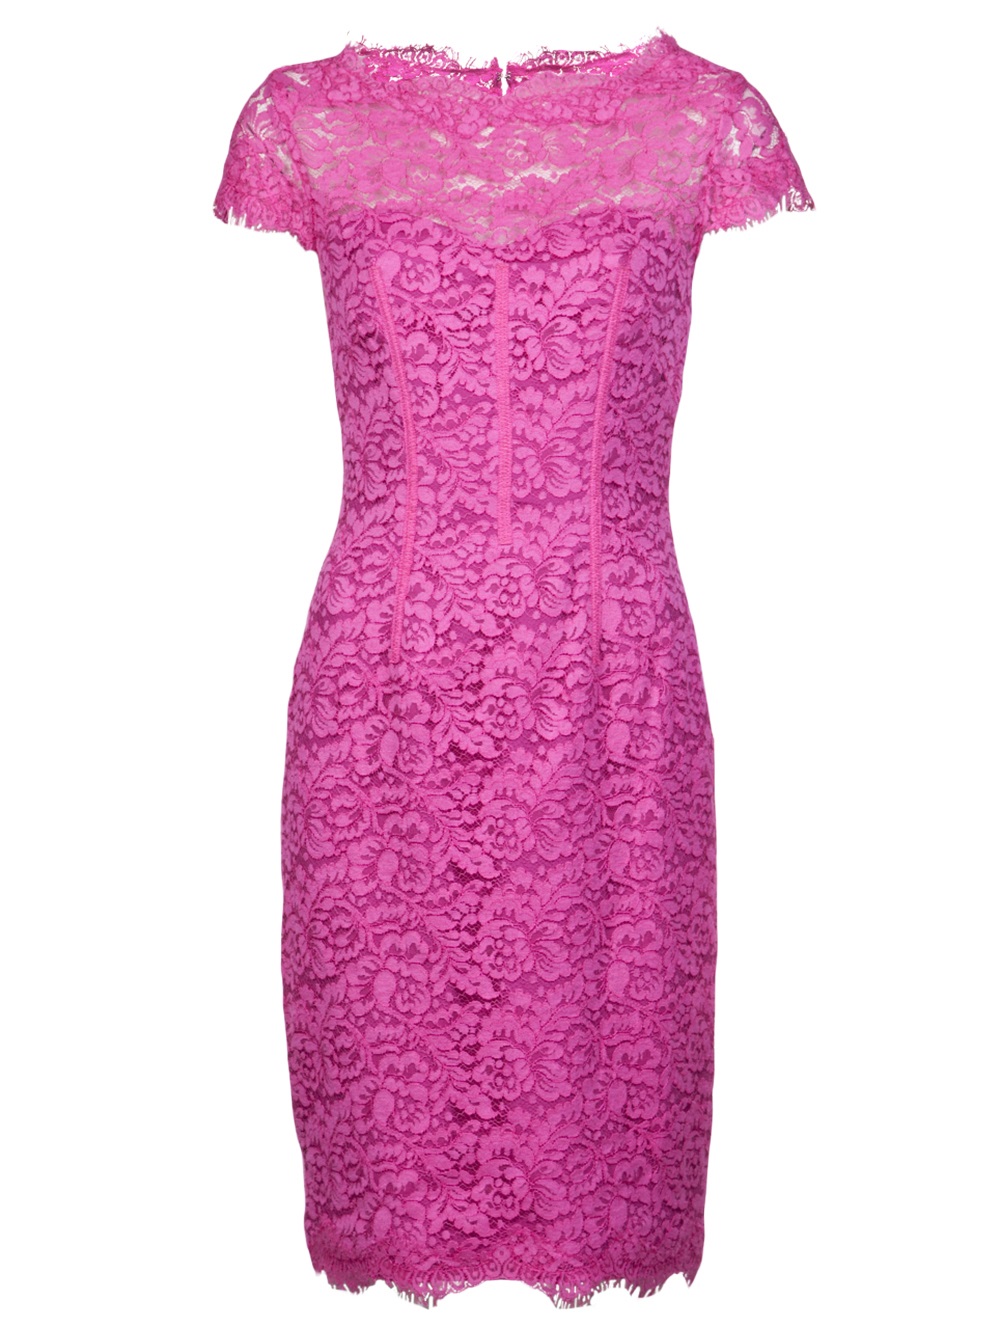 Lyst - Ml Monique Lhuillier Pink Corset Cocktail Dress in Pink